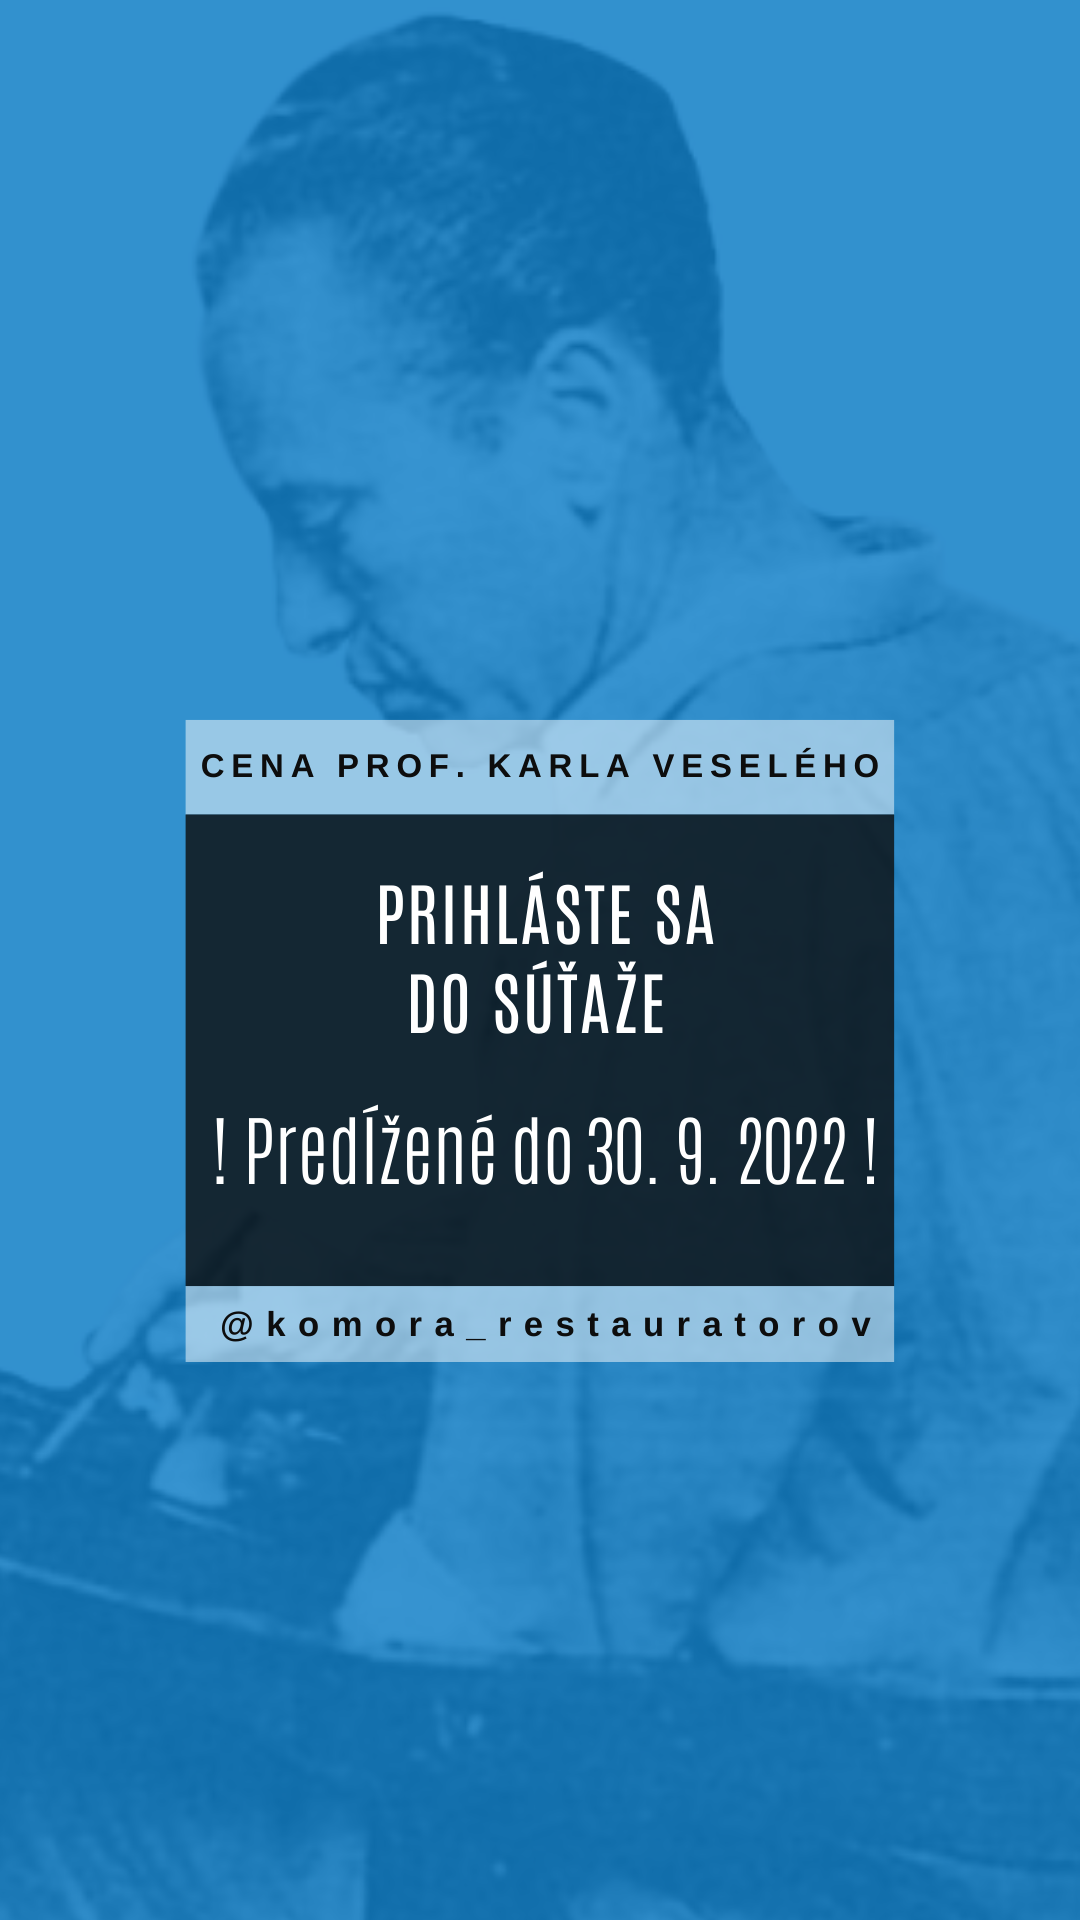 Cena prof. Karla Veselého